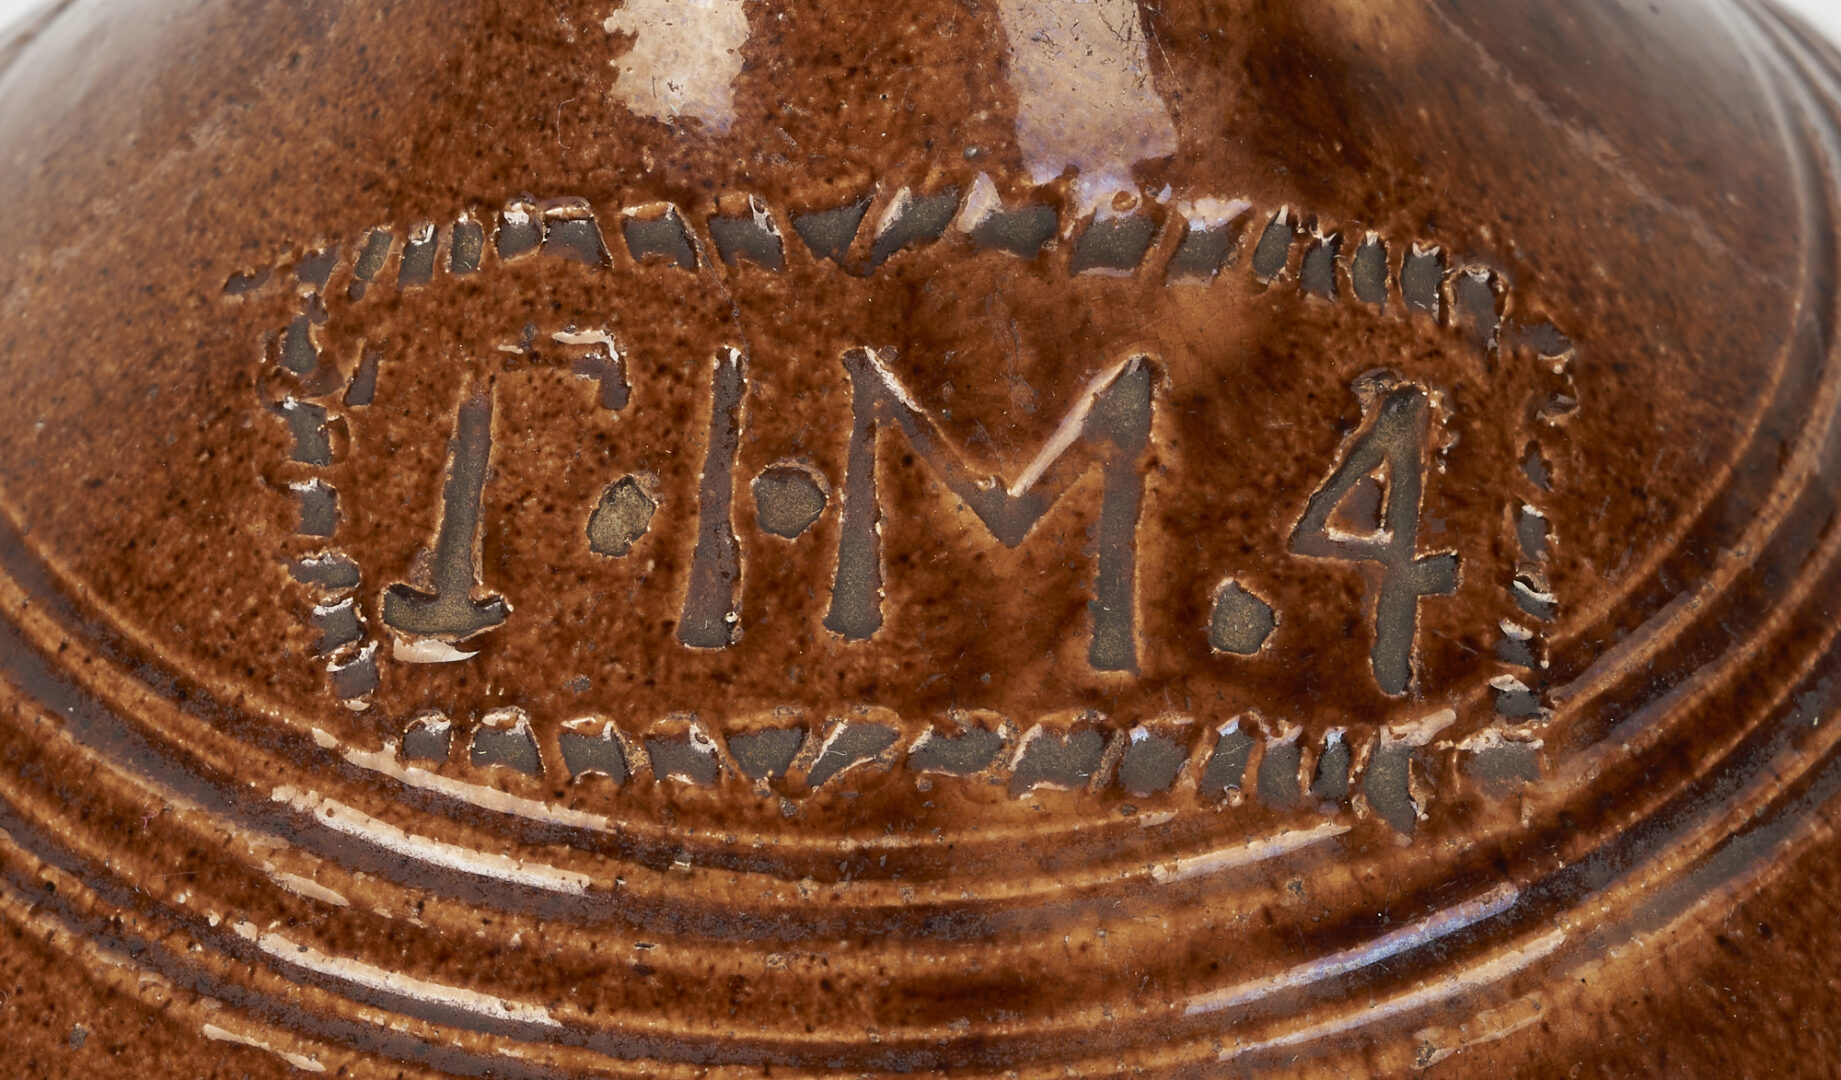 Lot 179: Great Road Southwest Virginia Earthenware Pottery Jug, Attrib. Thomas J. Myers